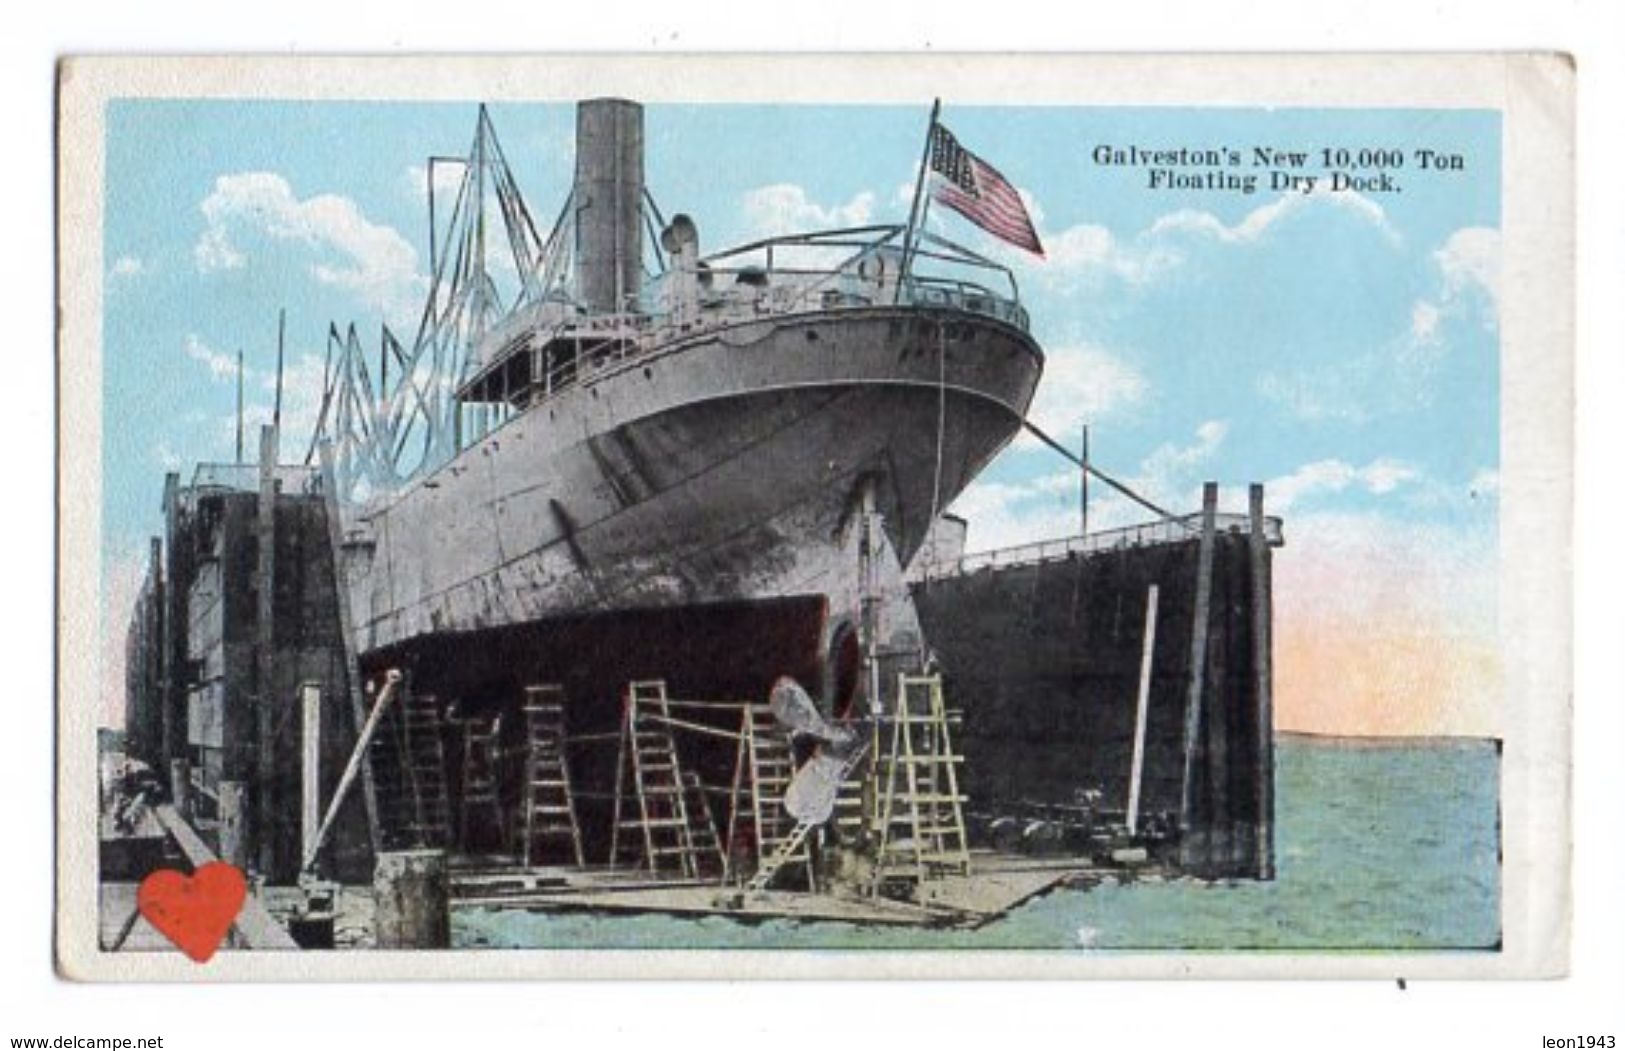 21082-LE-ETATS UNIS-Galveston's - New 10,000 Ton-Floating Dry Dock----------bateau - Galveston